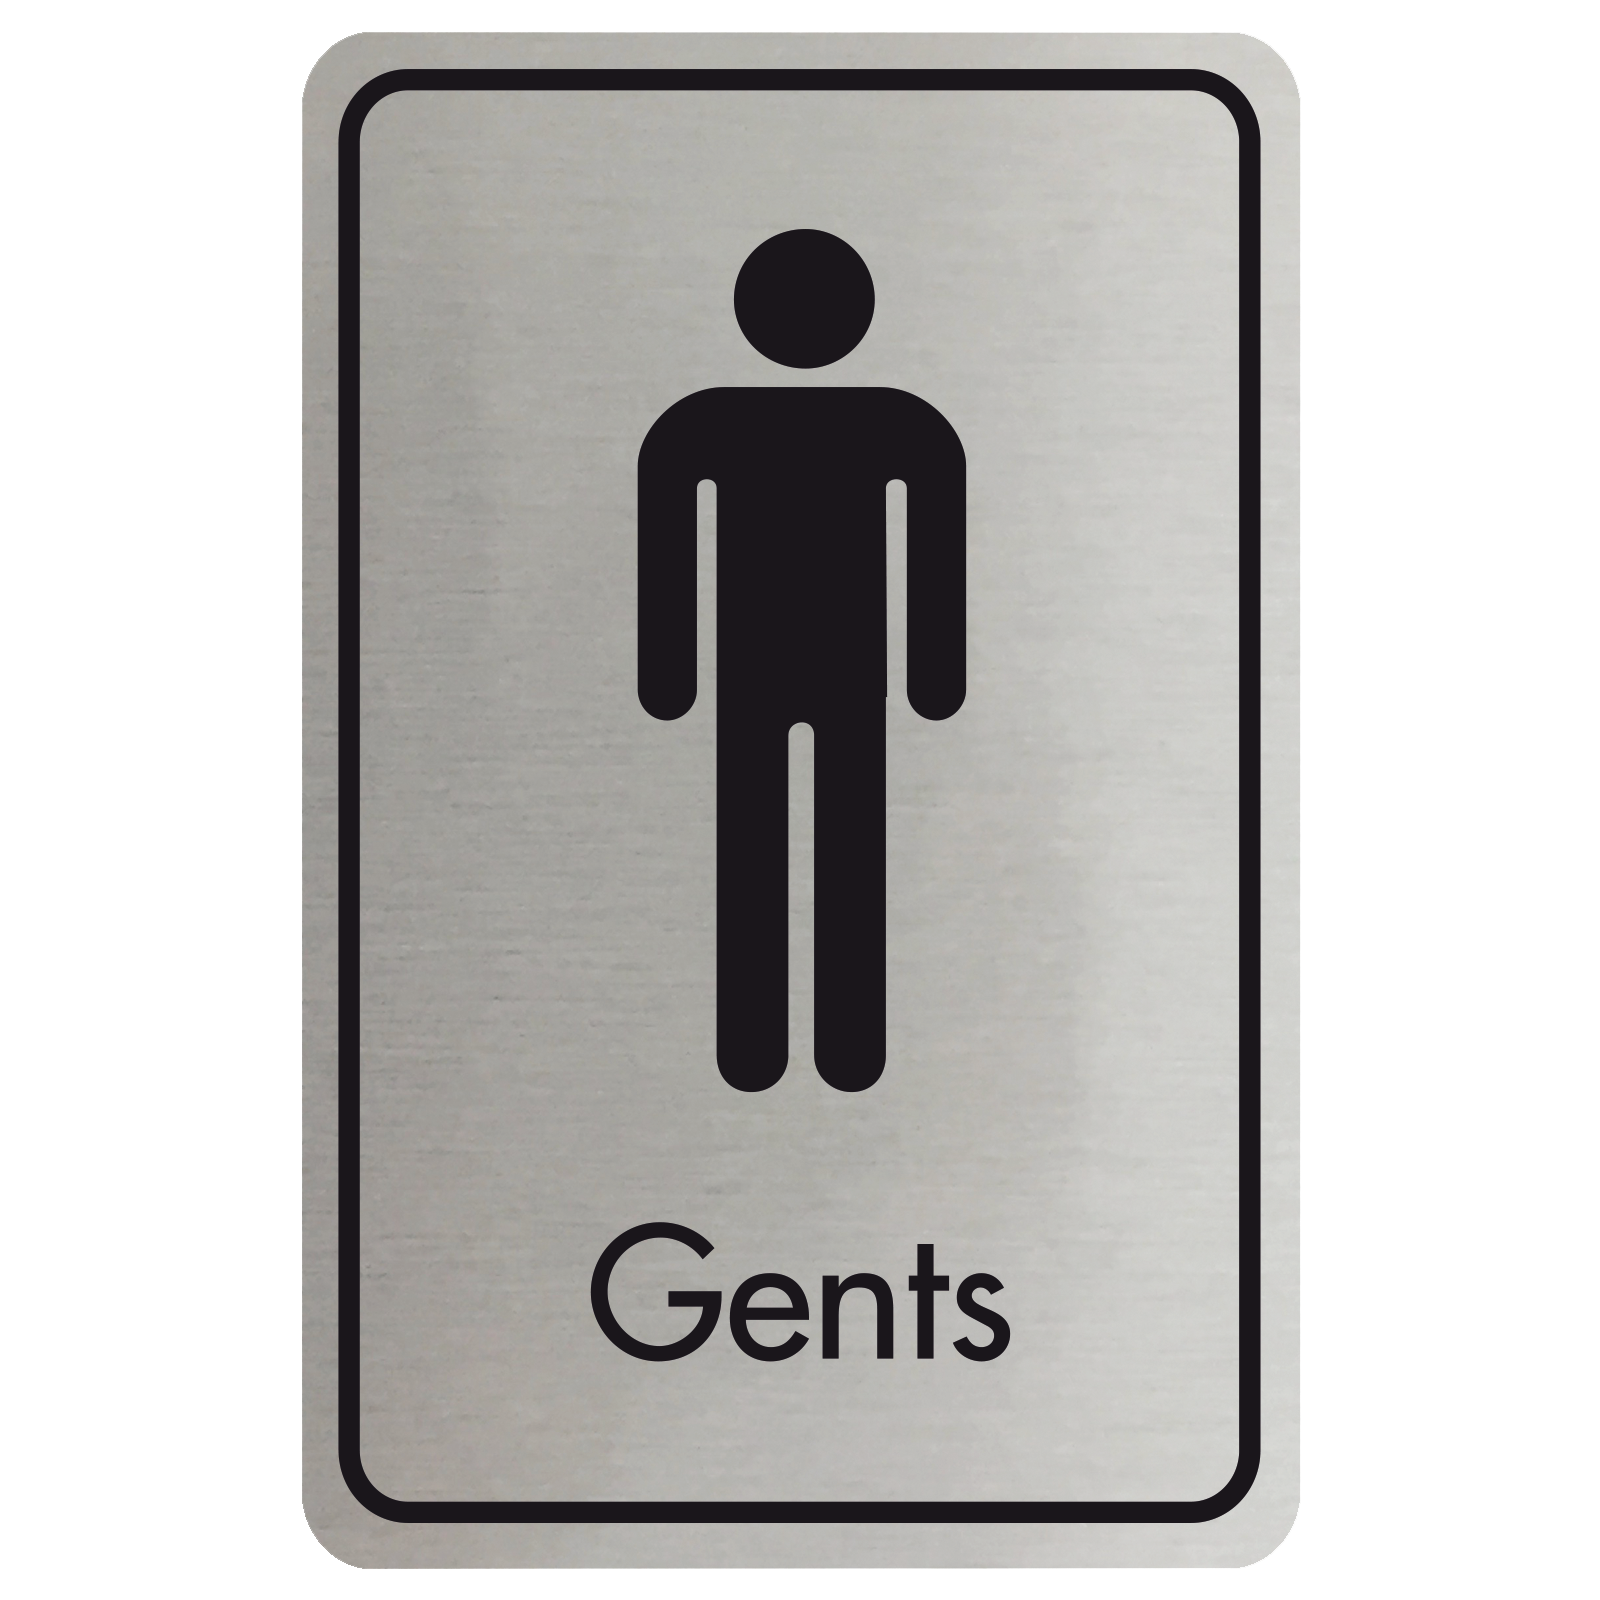 Large Gents Door Sign - Black on Silver